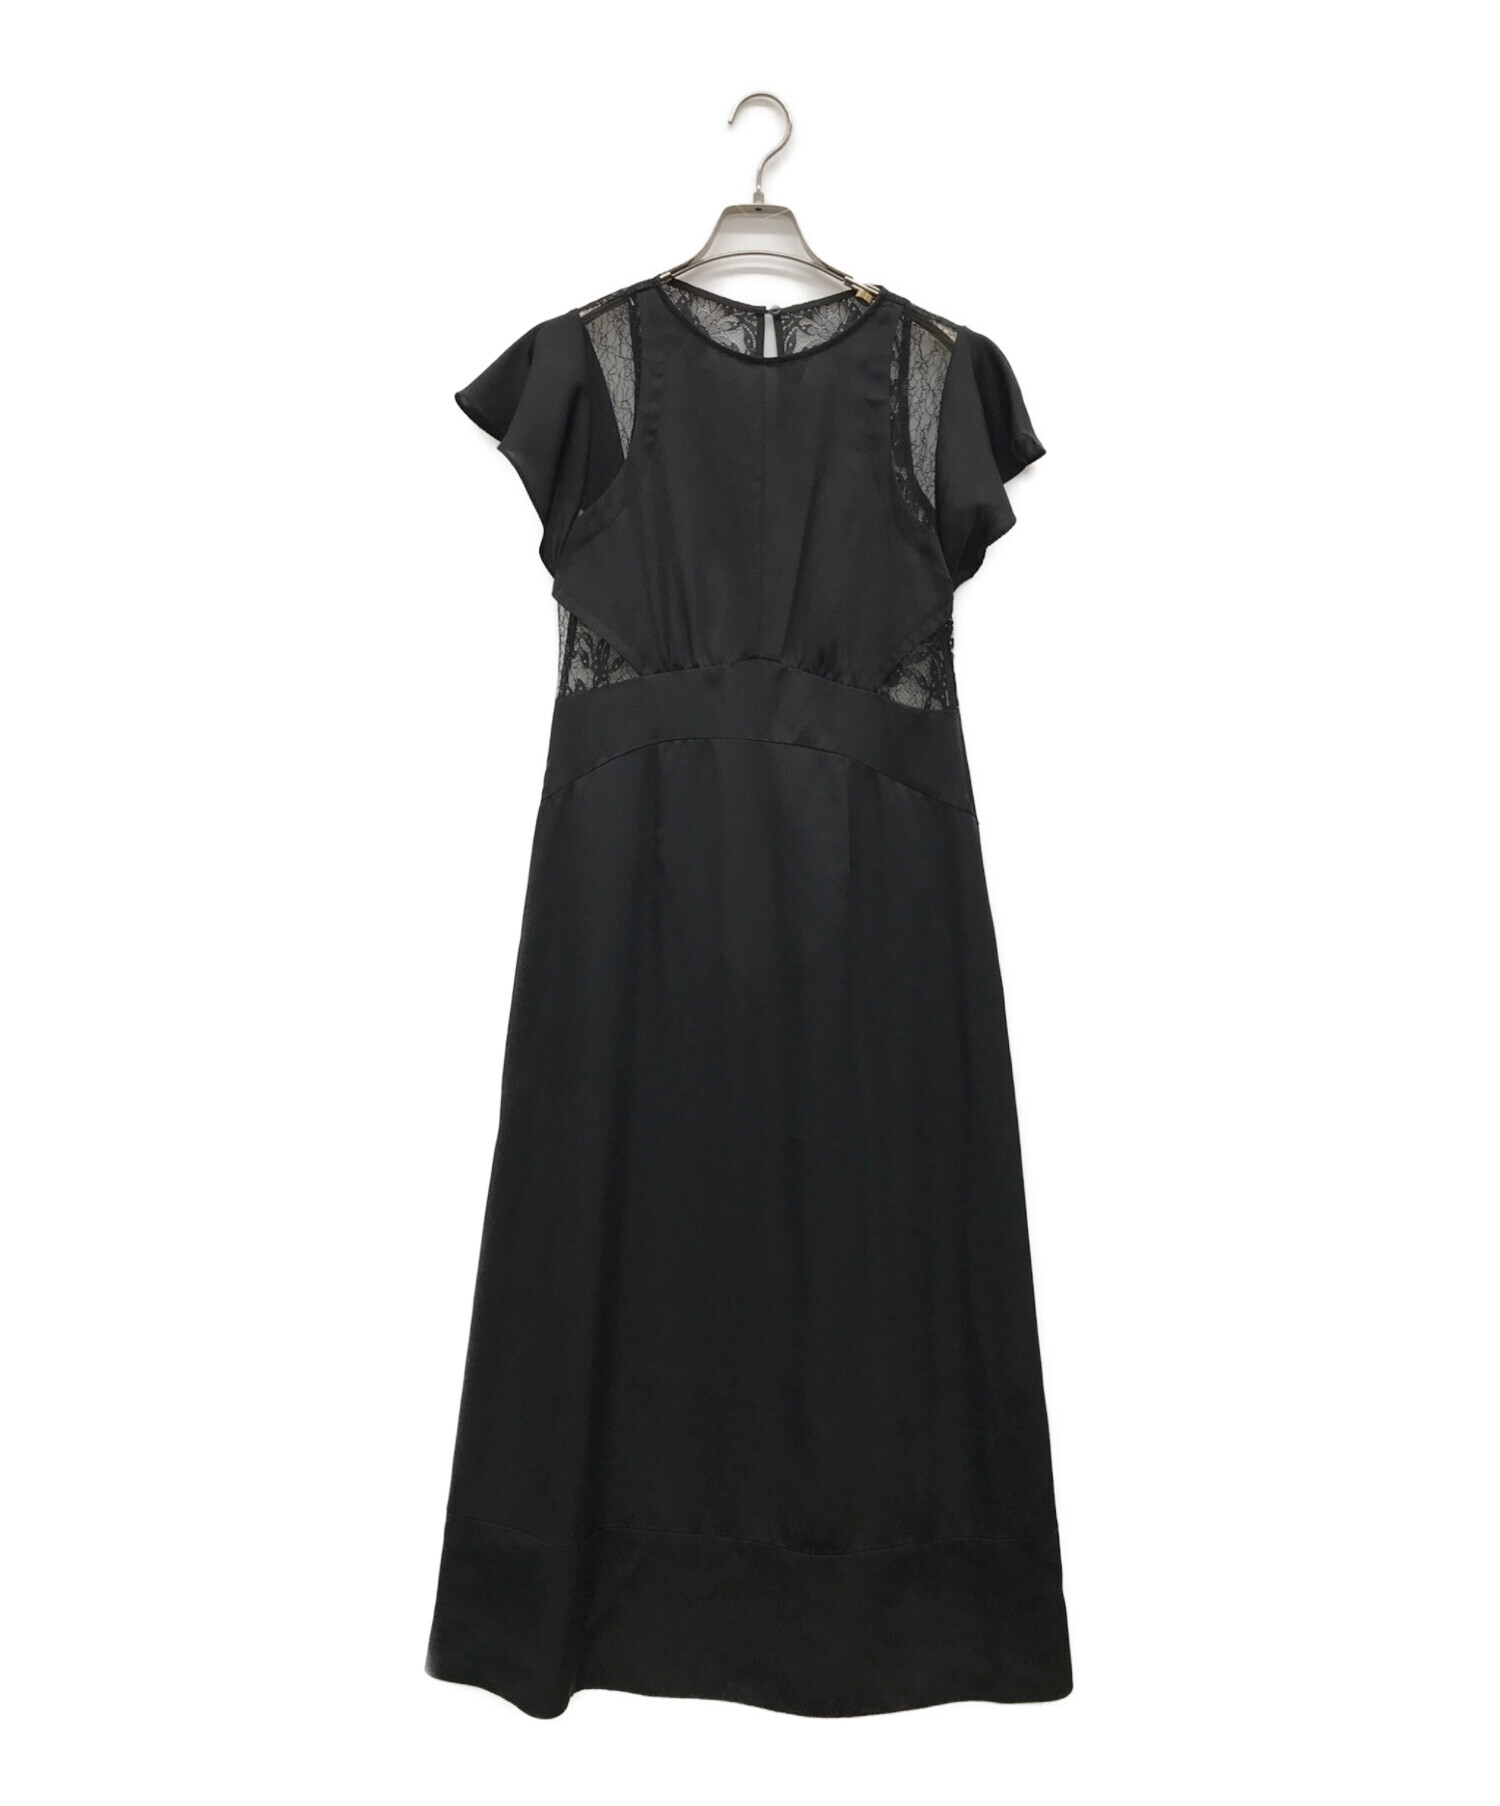 Snidel (スナイデル) バックシャンレースドレス ブラック サイズ:1